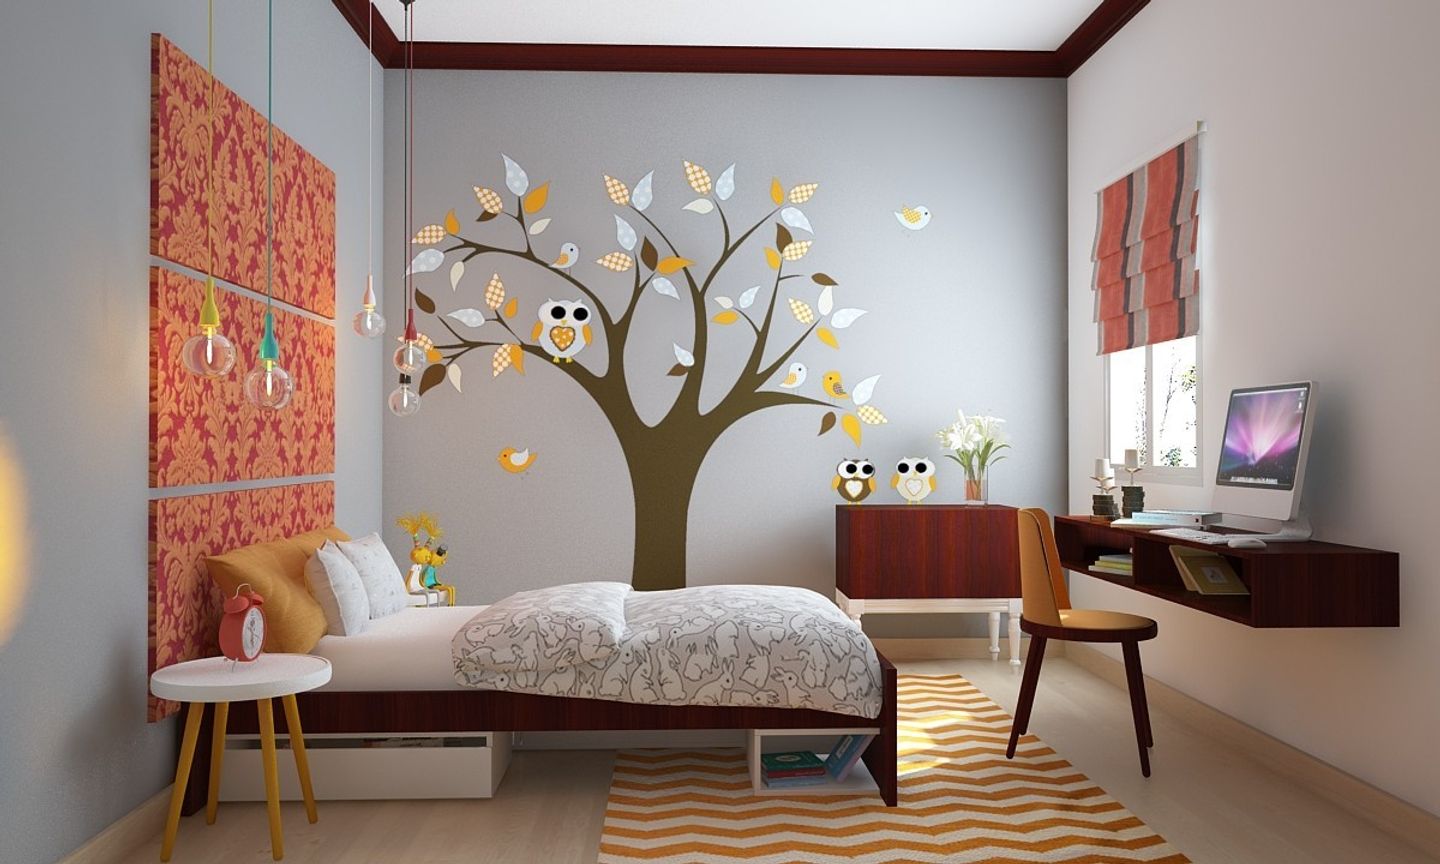 Shabby Chic Kid's Room Design In Orange And Grey